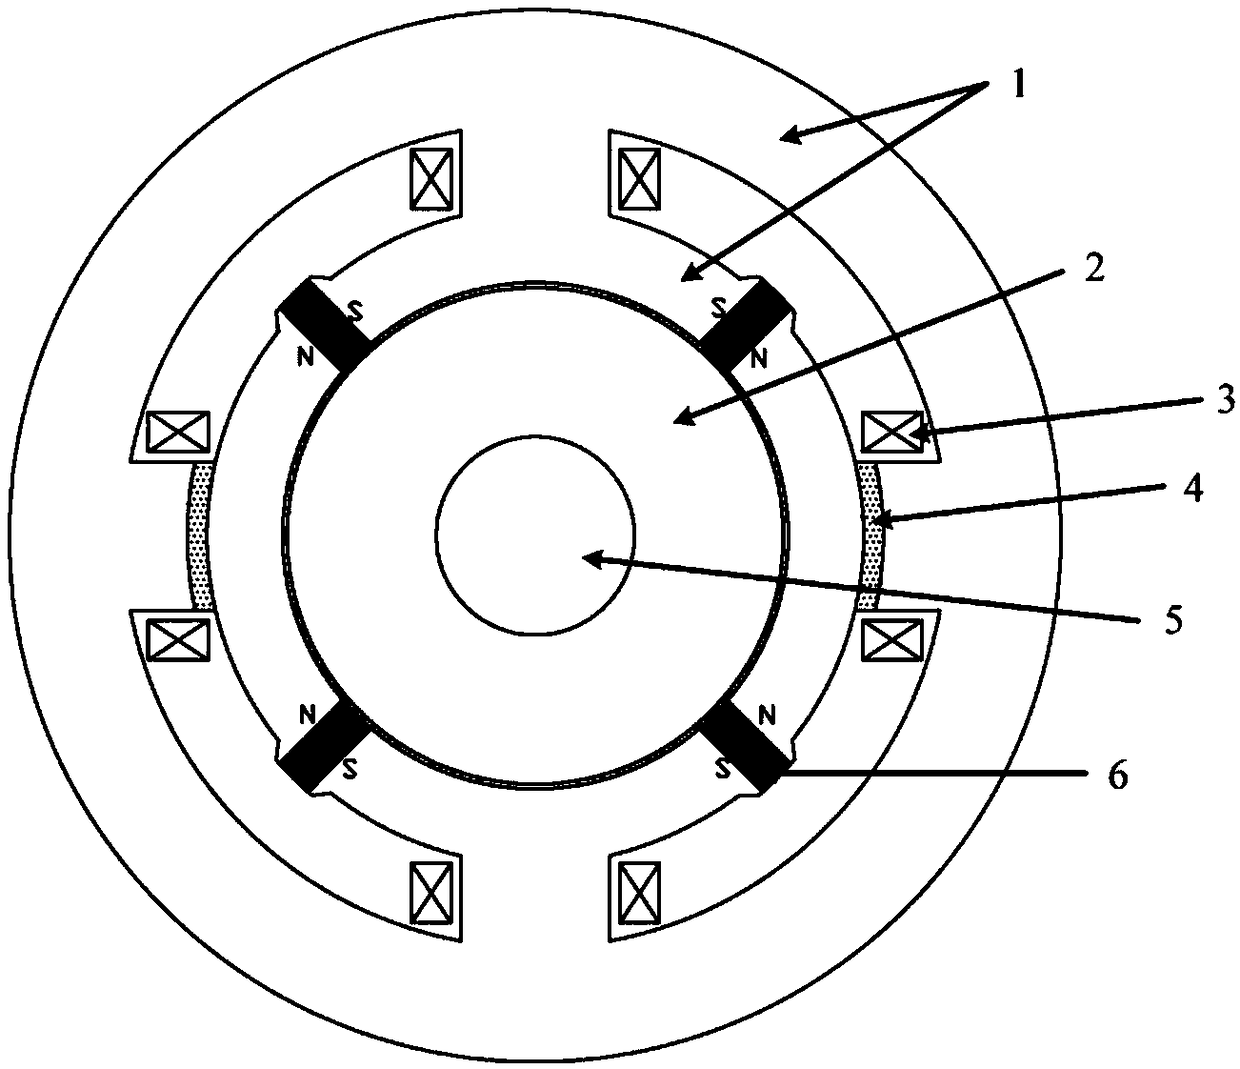 A heteropolar permanent magnet bias hybrid radial magnetic bearing